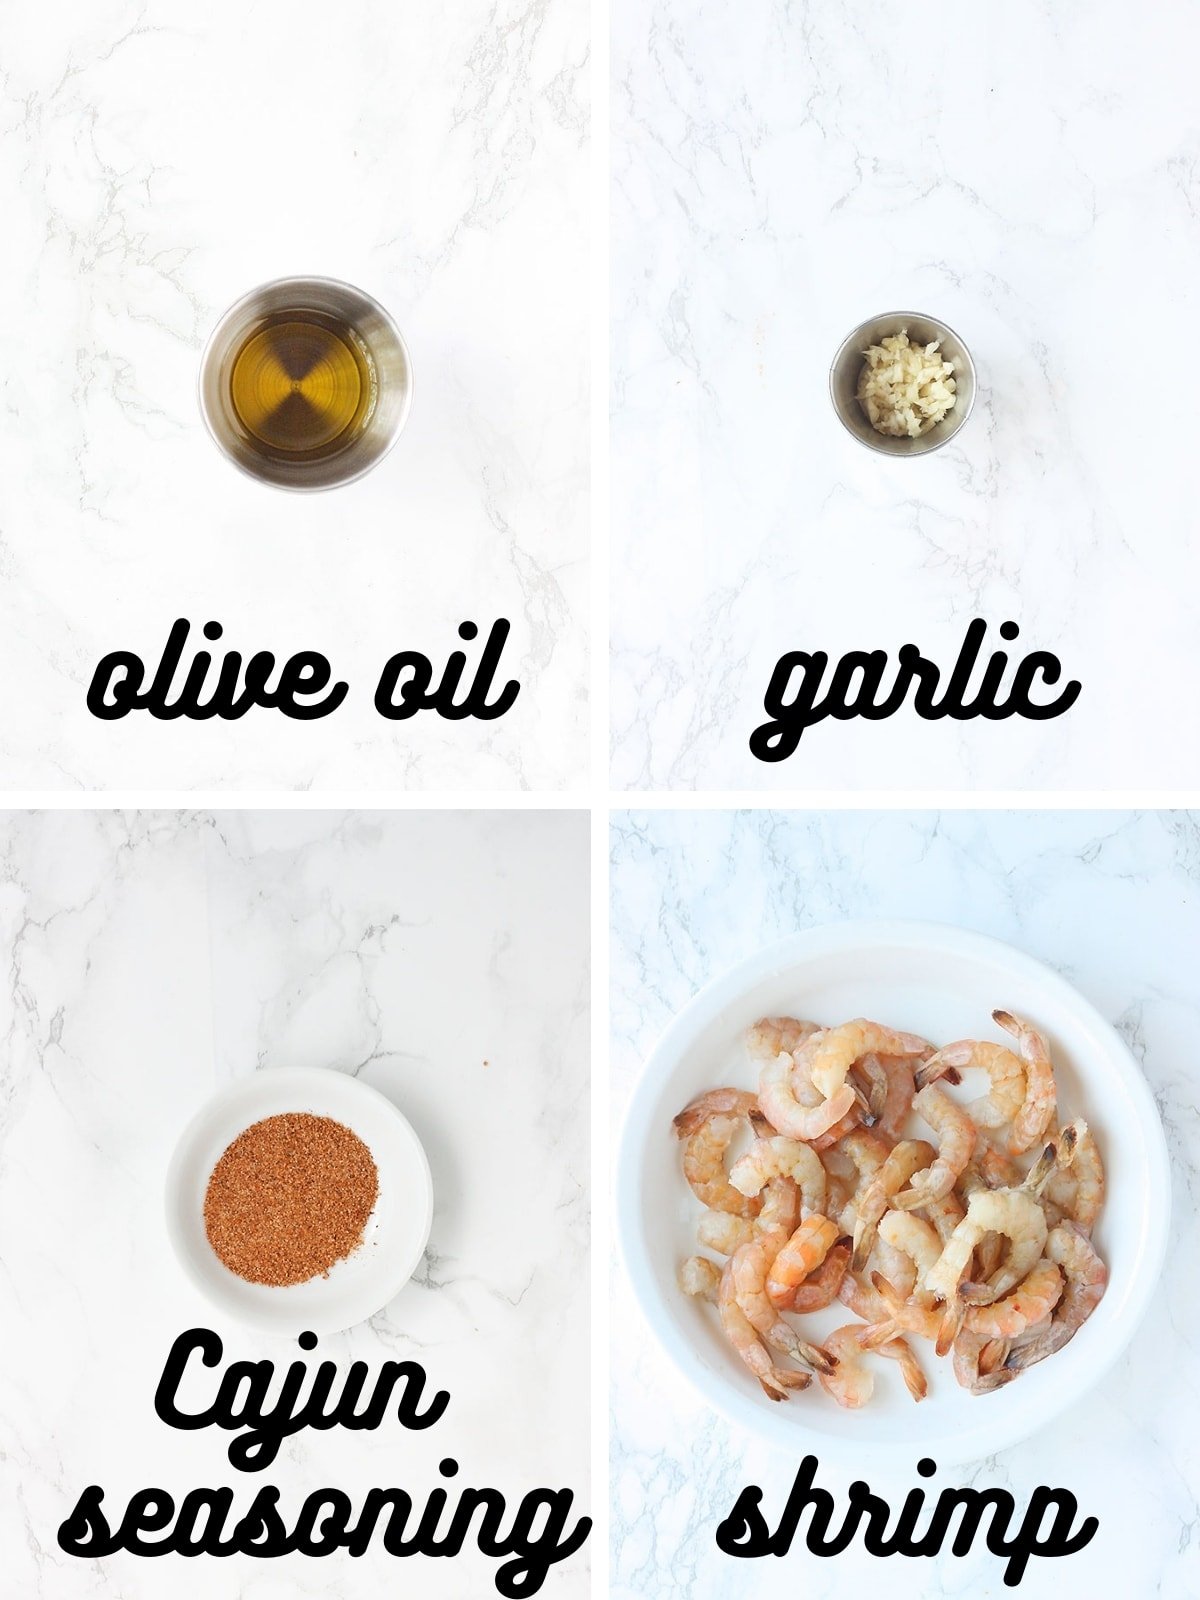 seasoning ingredients for shrimp nachos includes olive oil, minced garlic, Cajun seasoning and one pound of large shrimp